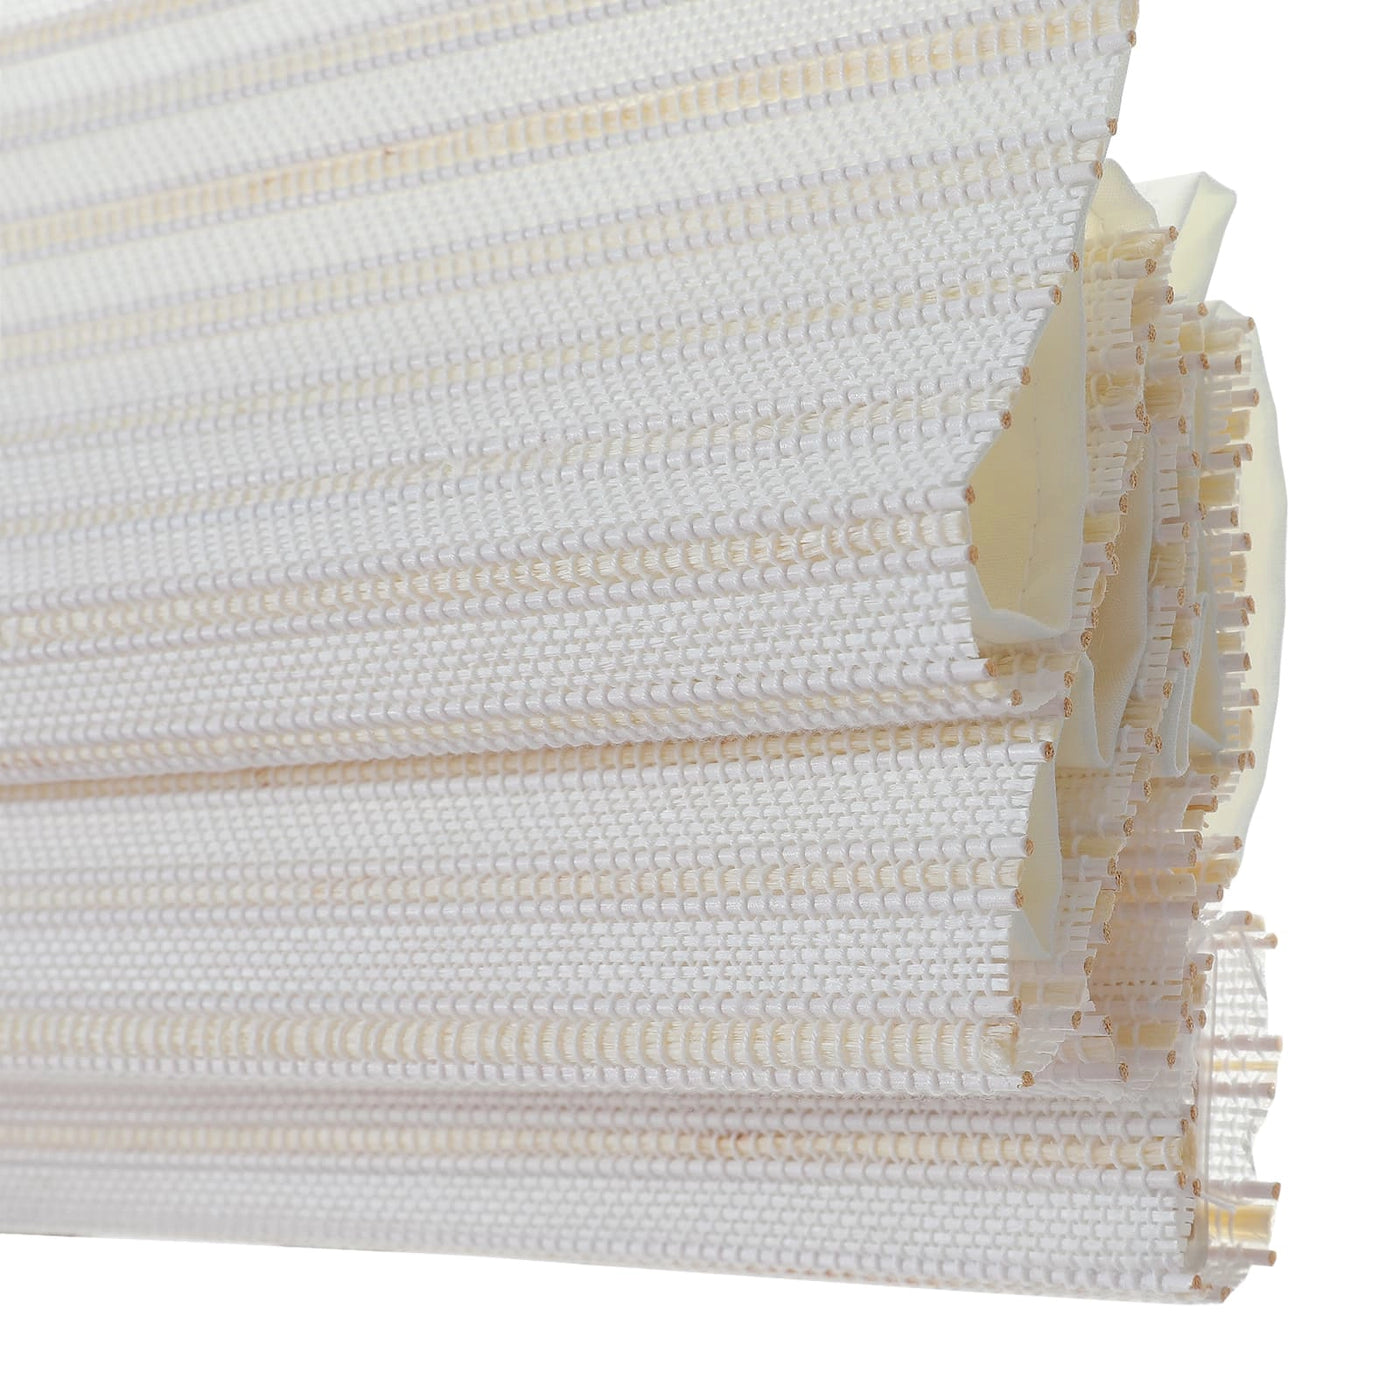 Natural Paper Bamboo Woven Shade - White